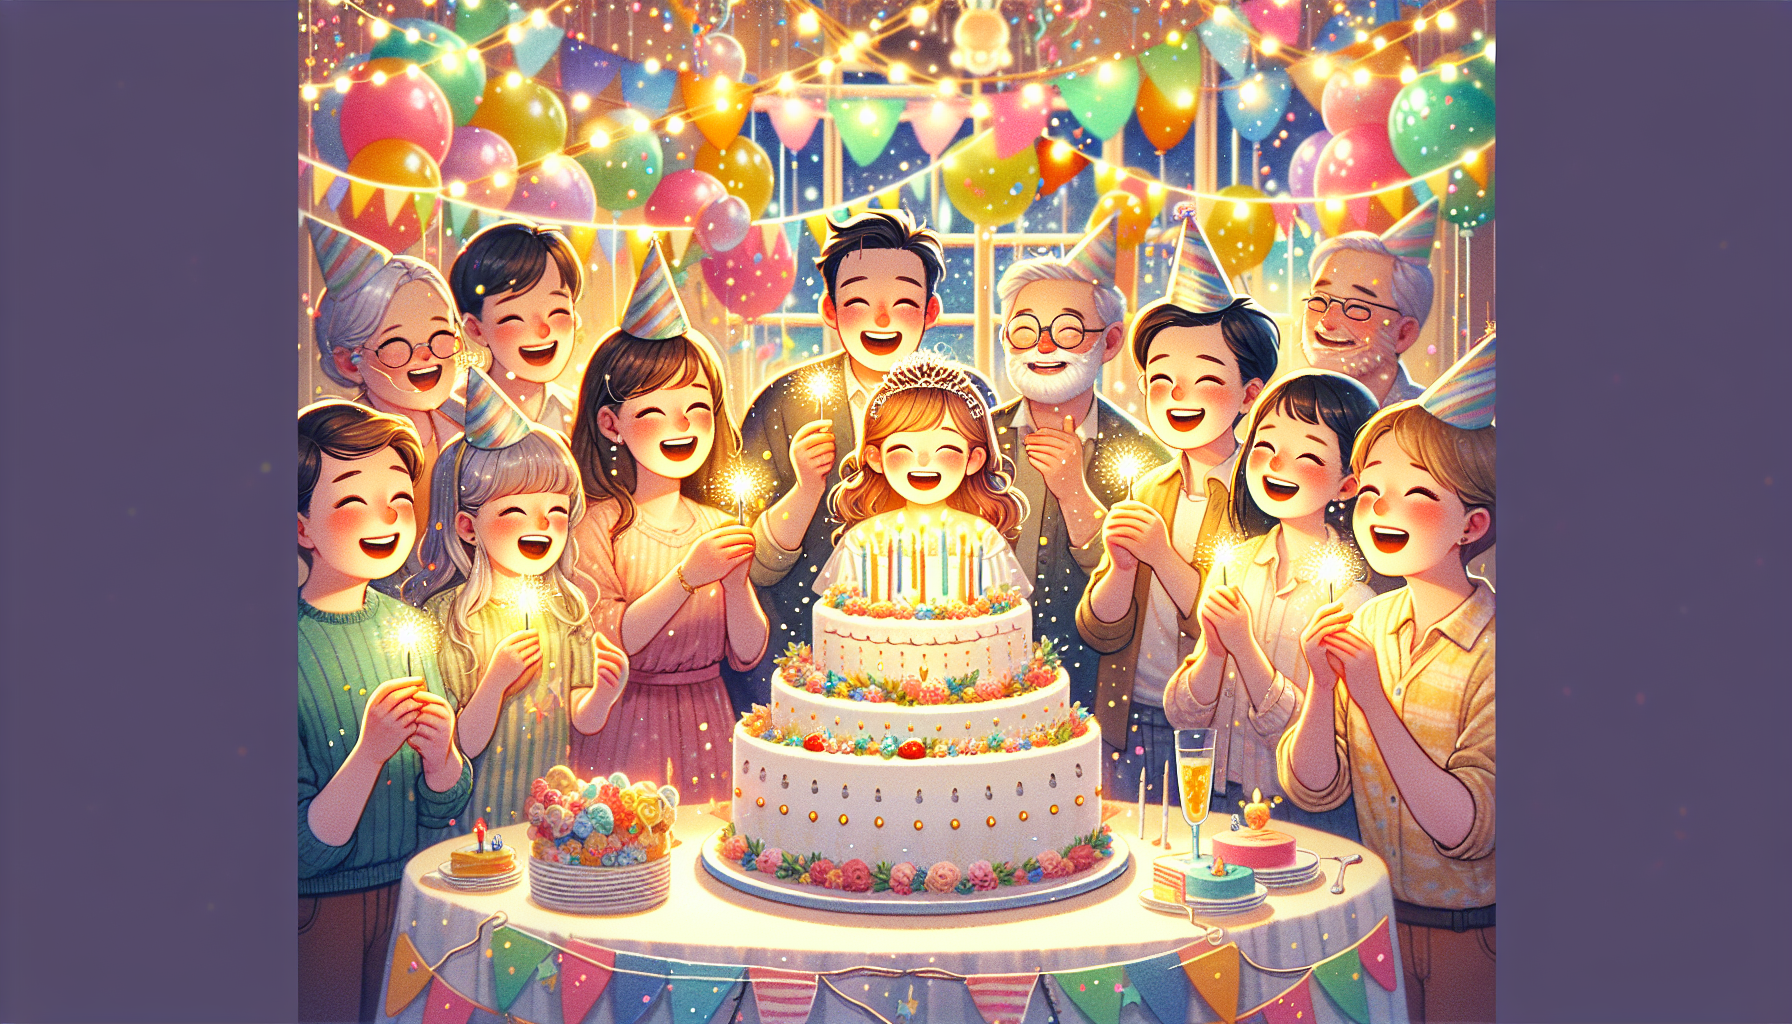 Illustration of celebrating birthdays, even if belated